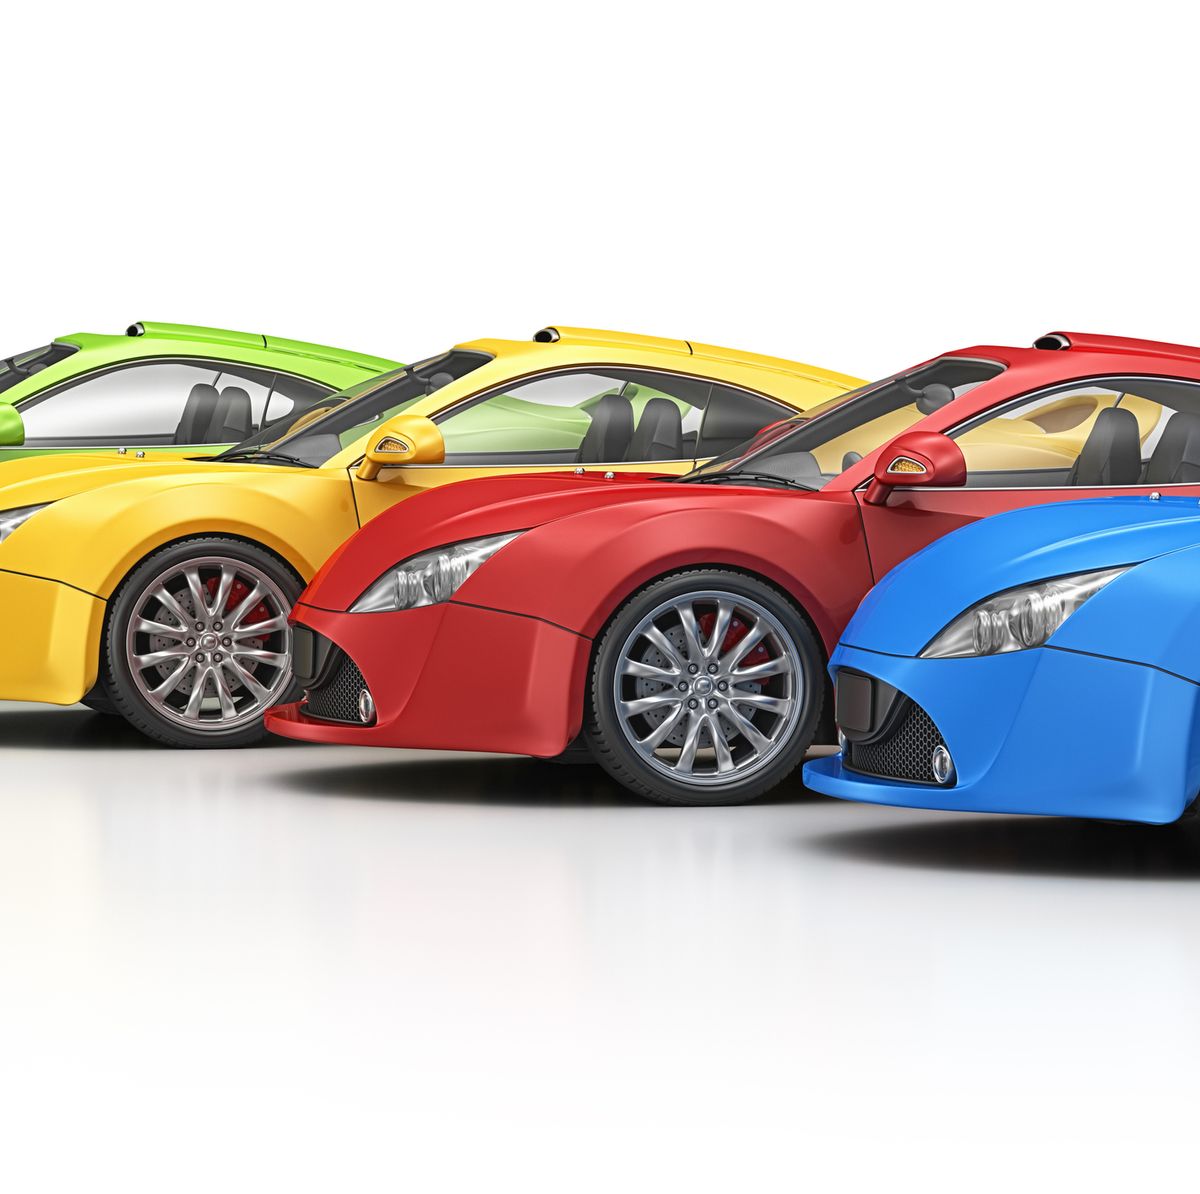 Dupli-Color Clear Perfect Match Automotive Top Coat - 8 oz